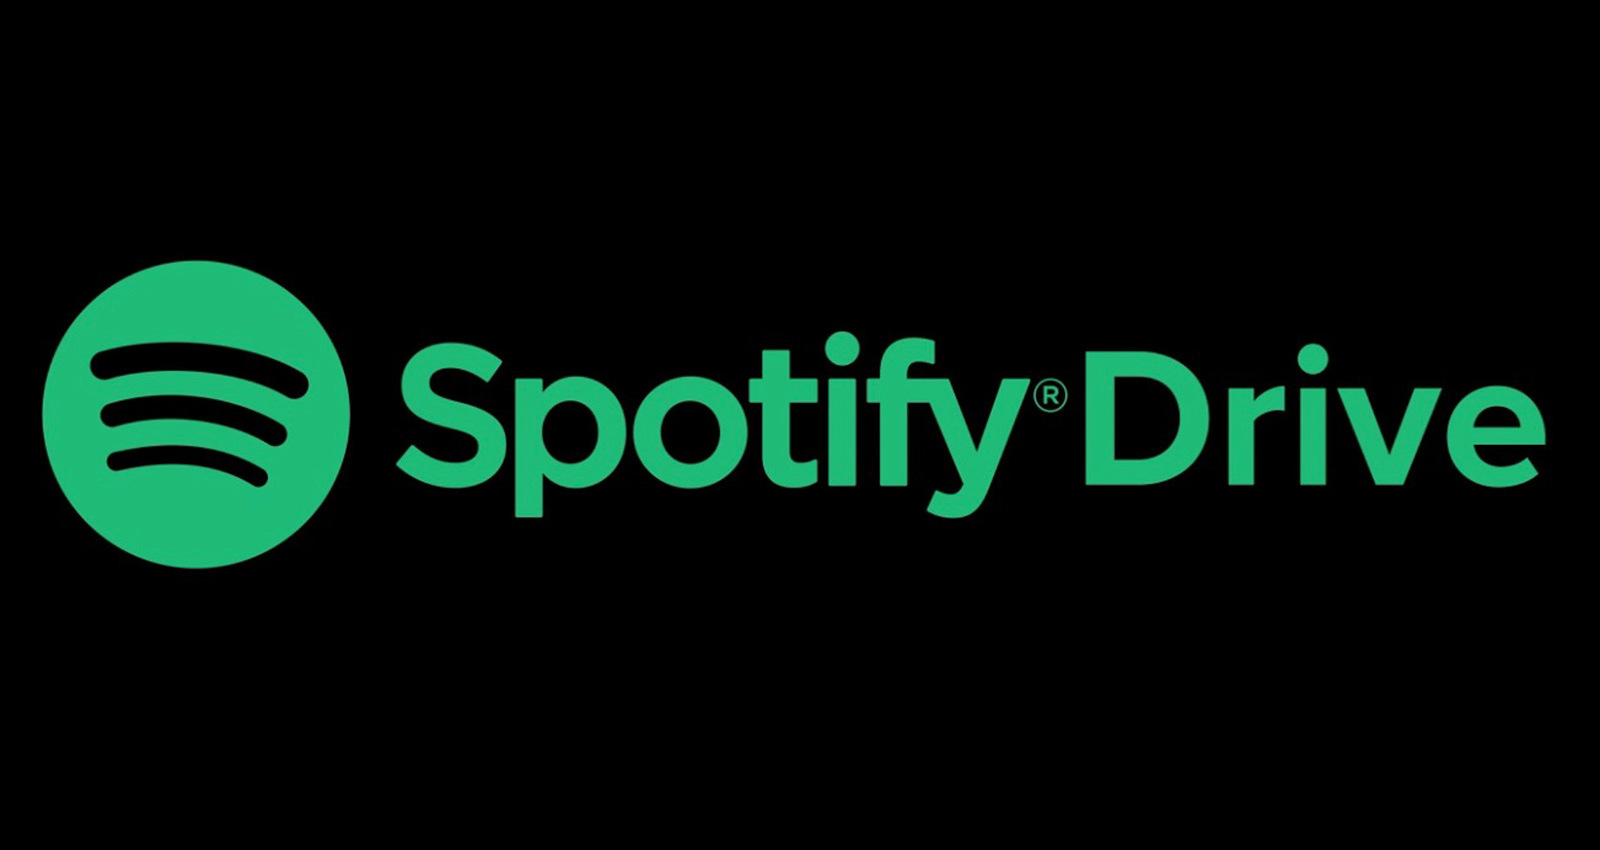 SpotifyDrive